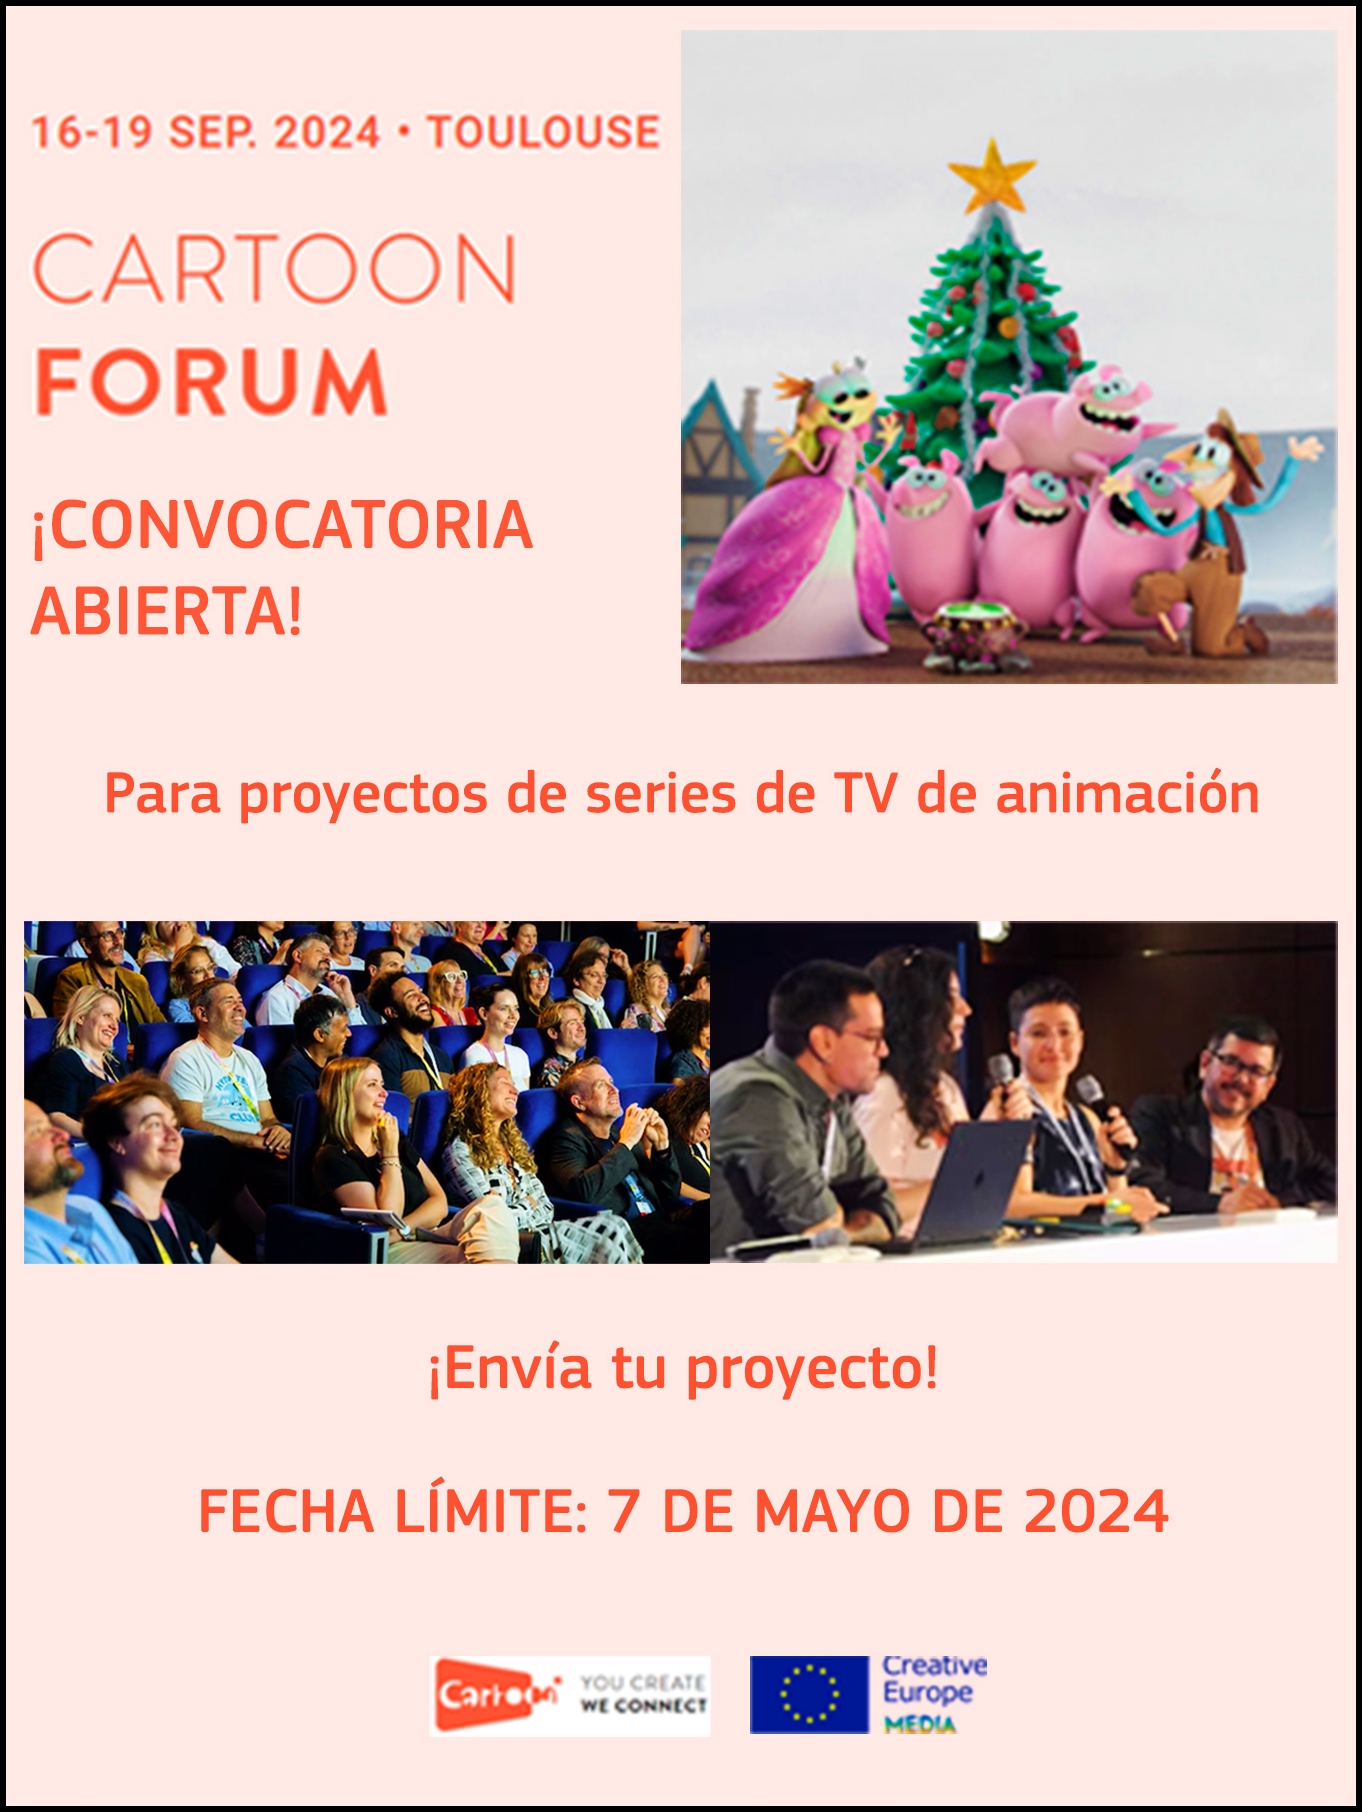 Cartoon Forum 2024 Interior